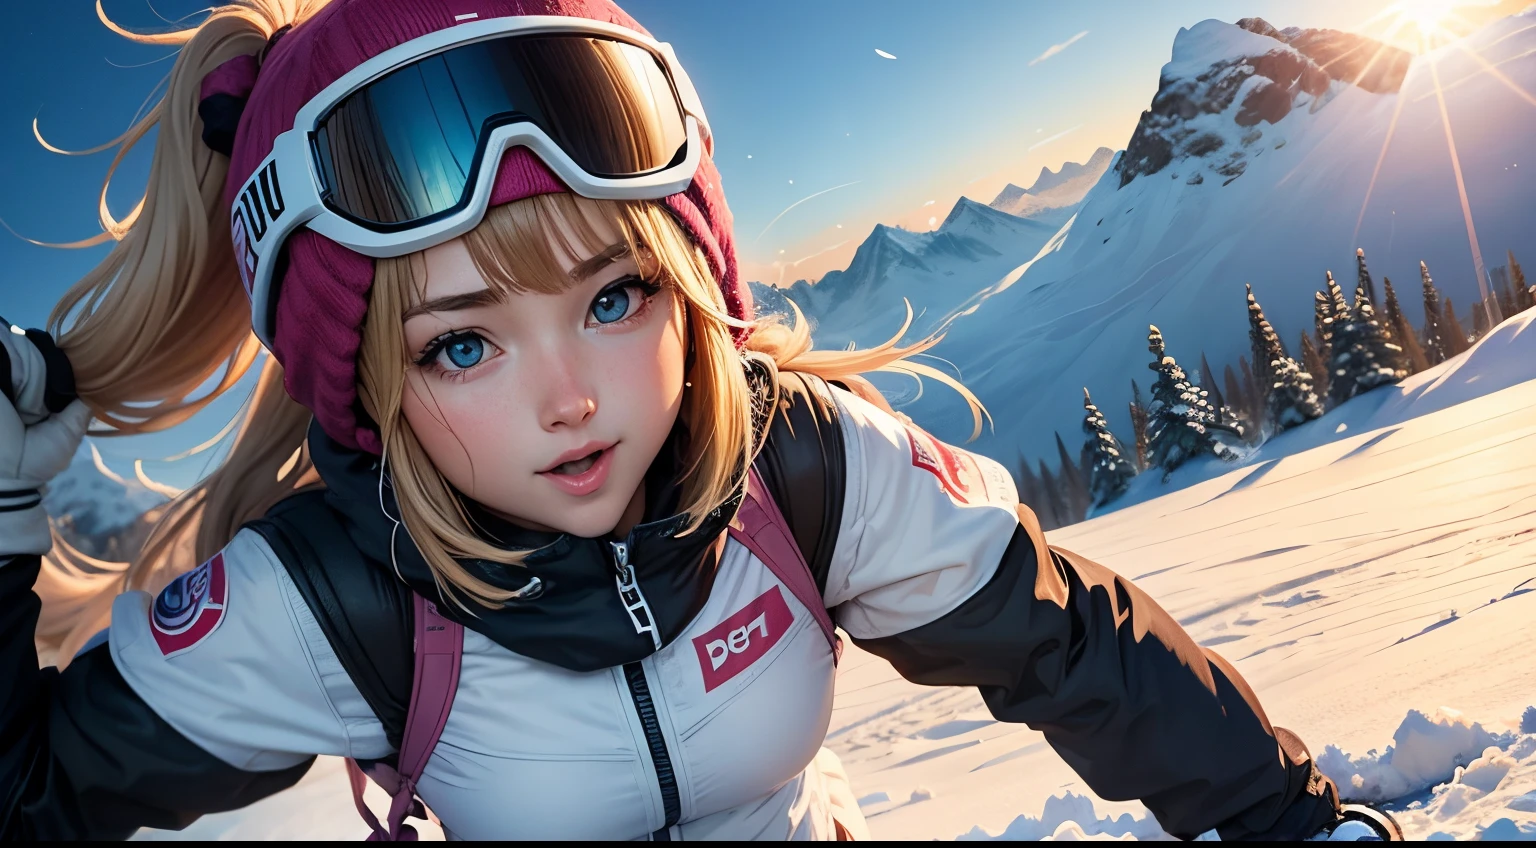 Skiing - Other & Anime Background Wallpapers on Desktop Nexus (Image 117450)